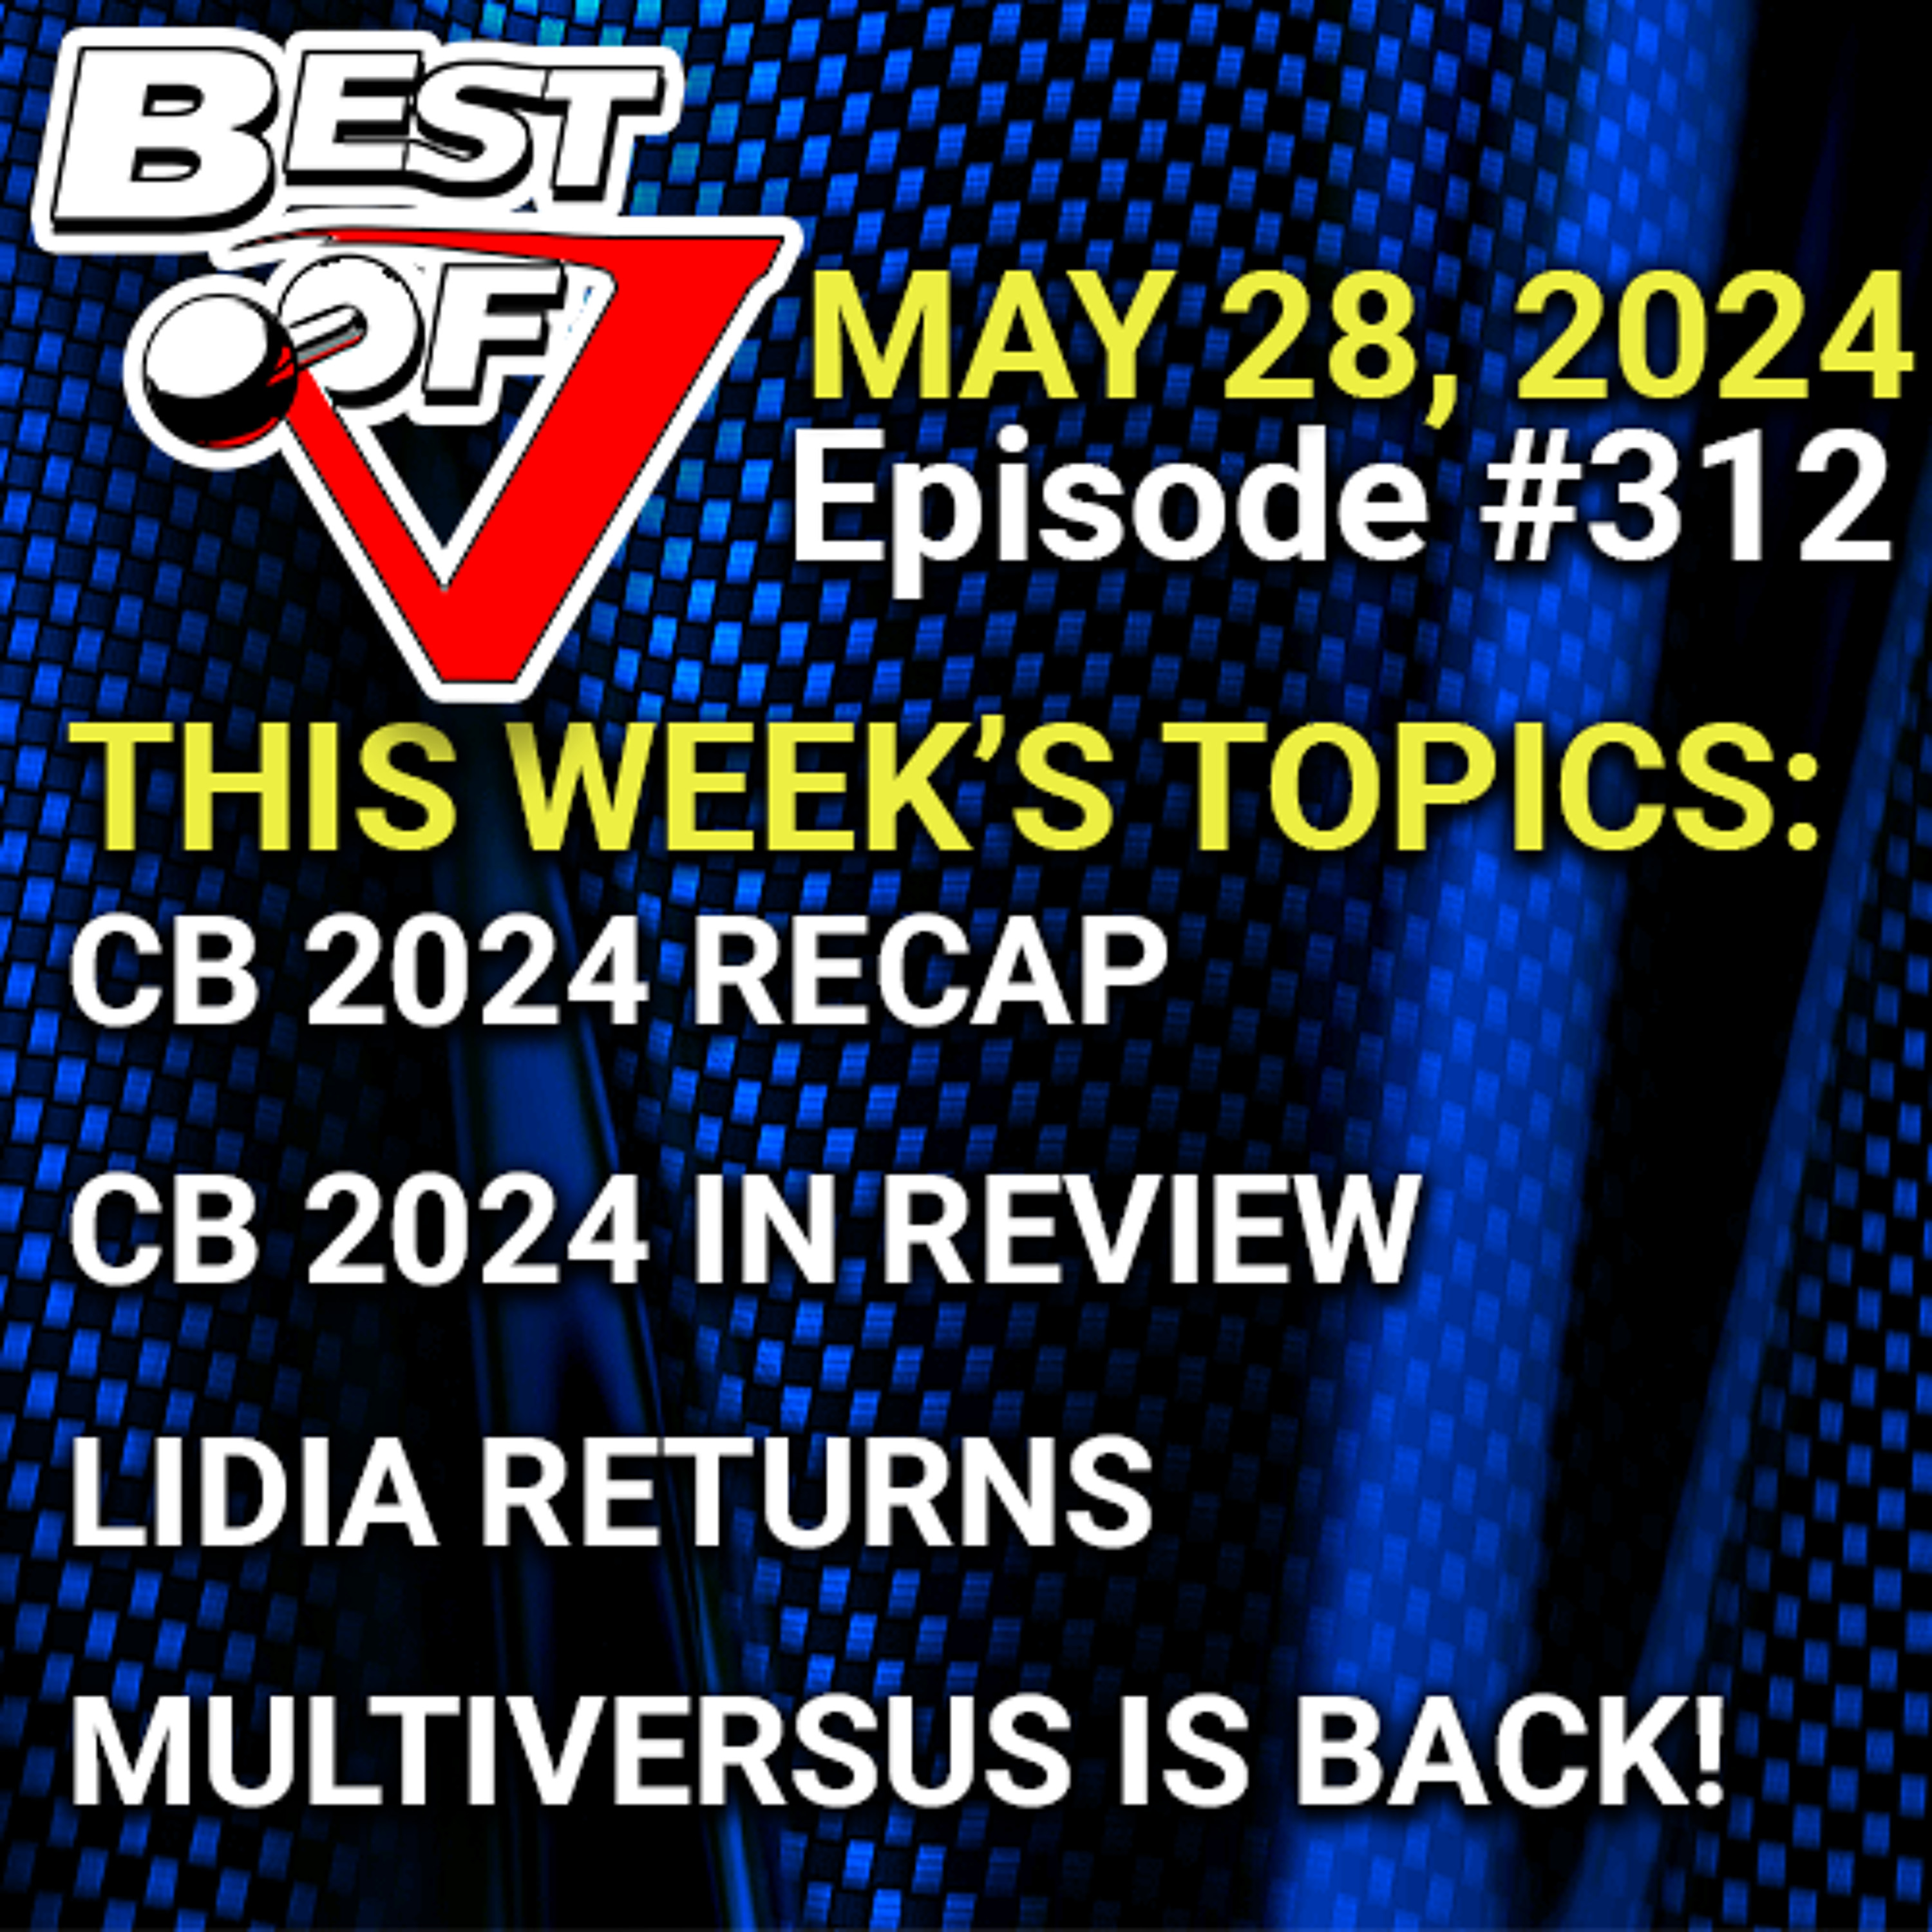 Best of V Episode 312 - The Combo Breaker 2024 Recap